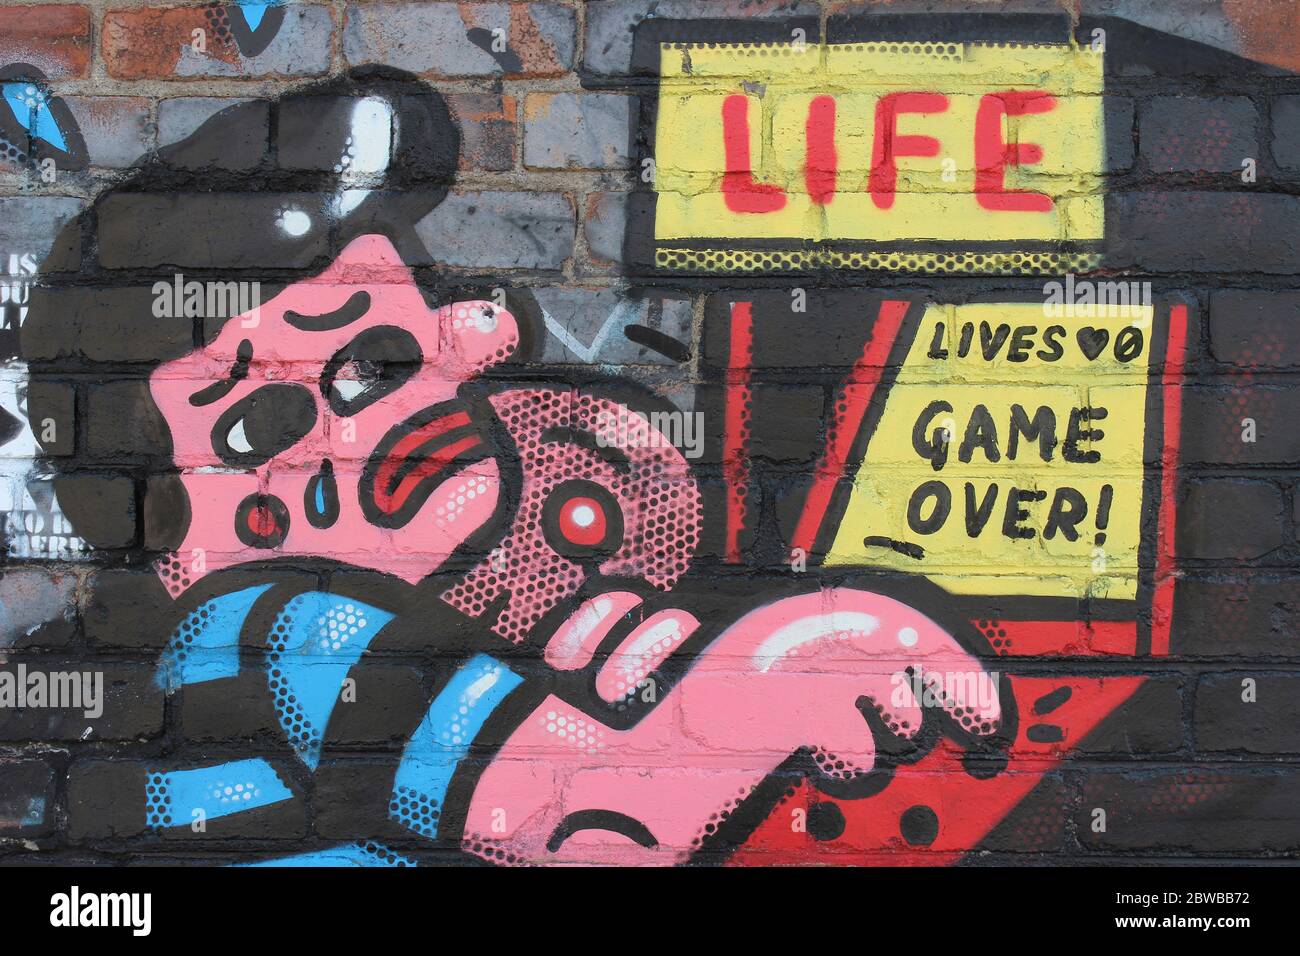 Life - Spiel Über Street Art Stockfoto